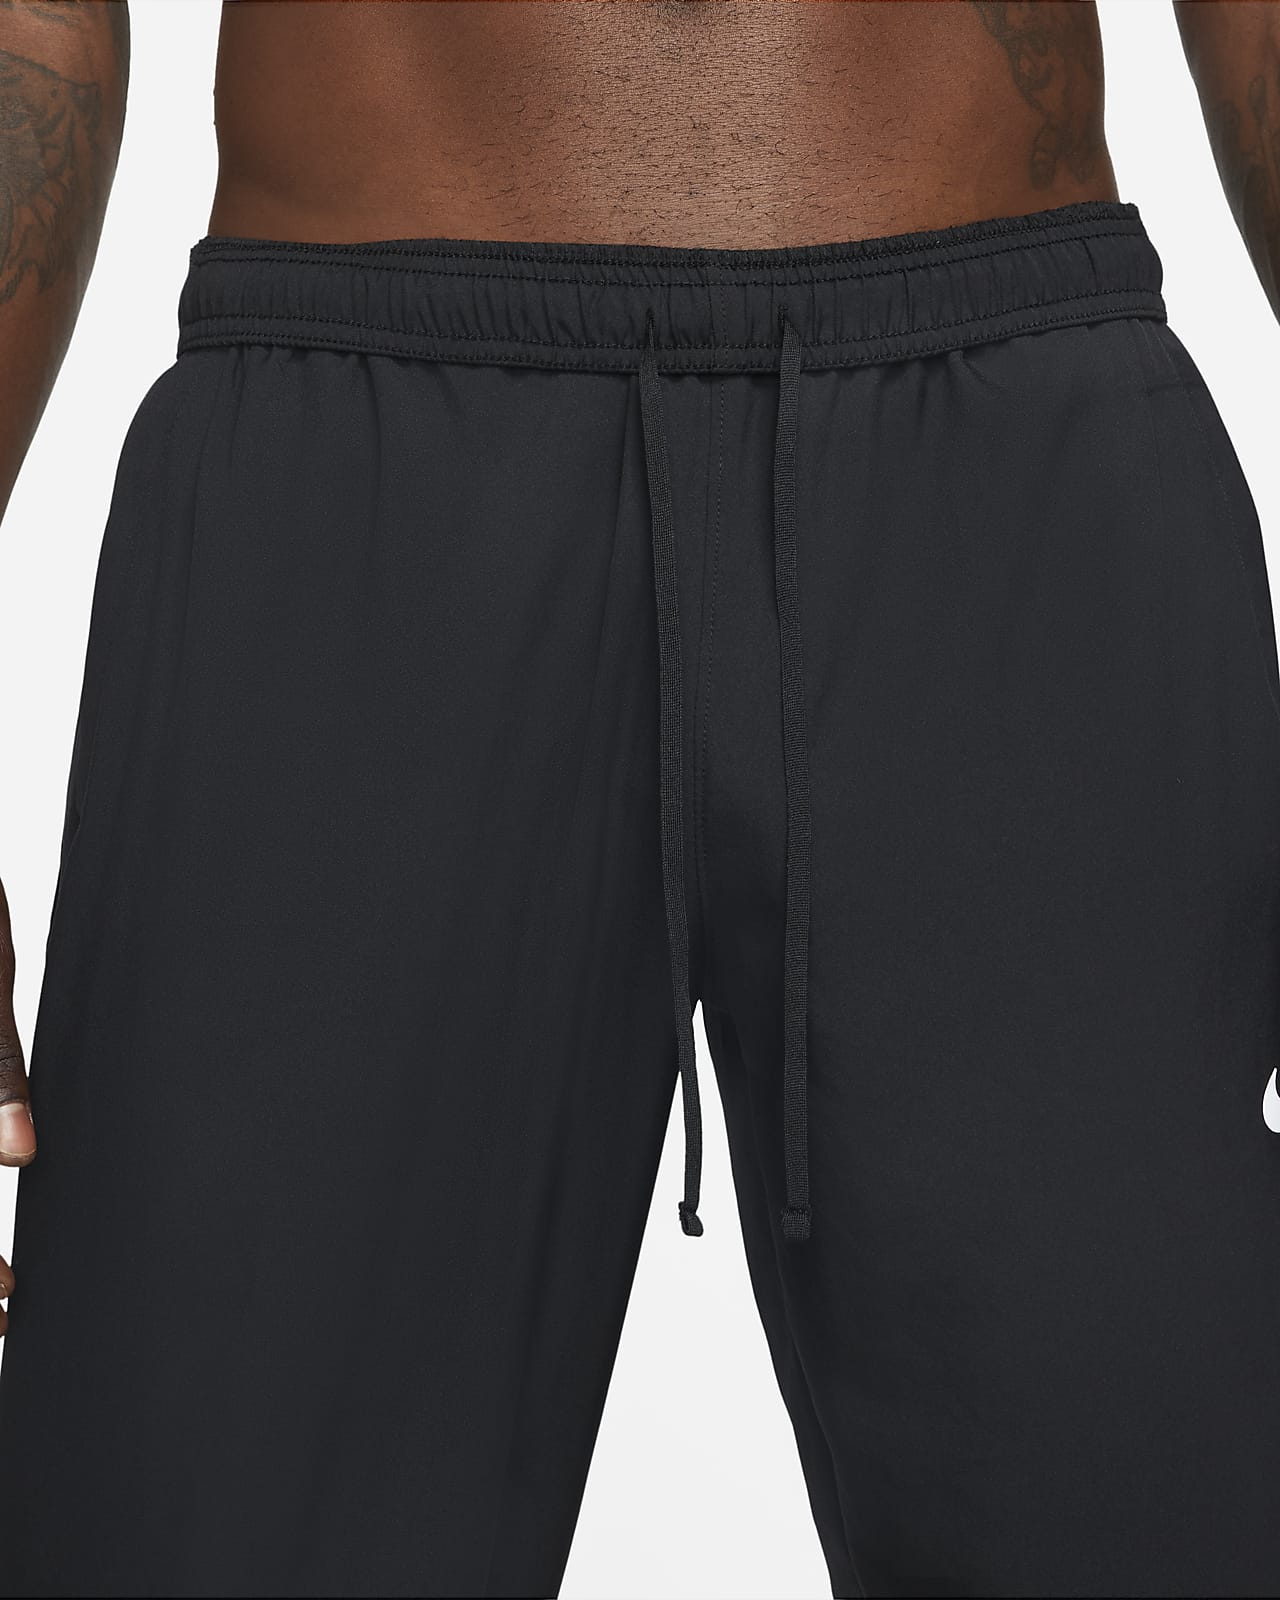 Nike Dri-FIT Run Division Challenger Woven Running Pants Men